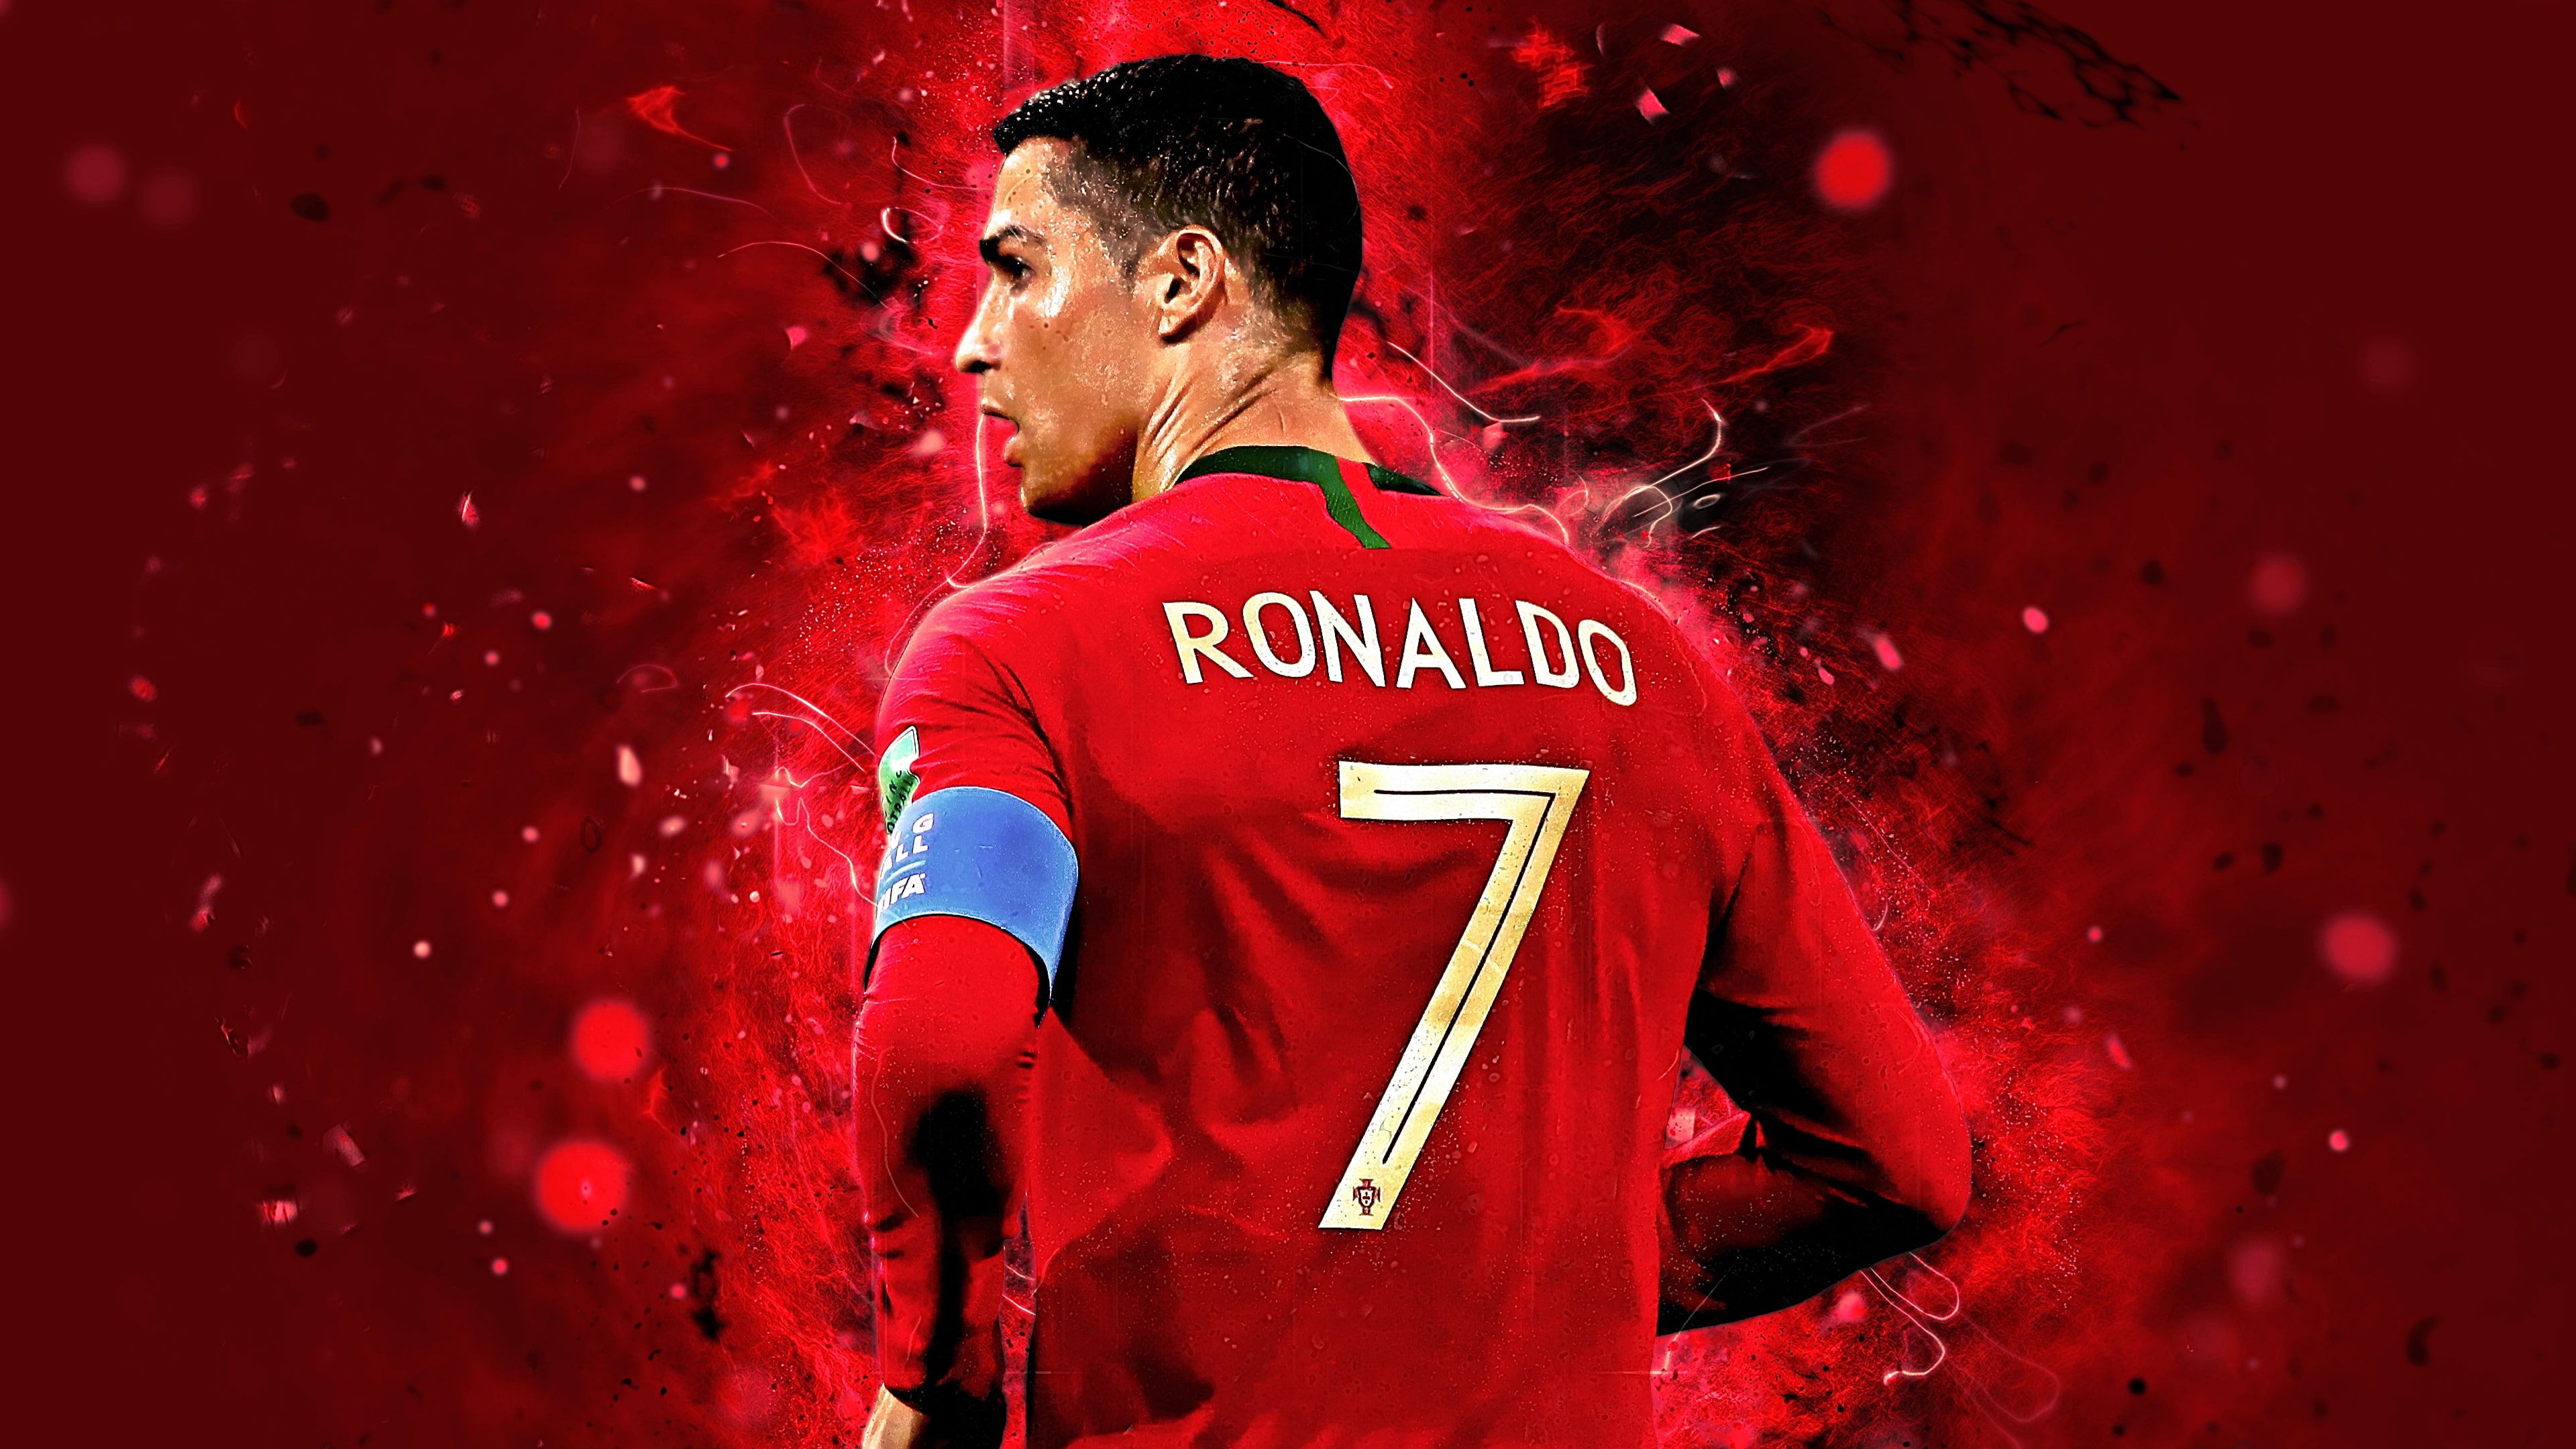 Cristiano Ronaldo 4K #Cristiano #Ronaldo K #wallpaper #hdwallpaper # desktop. Cristiano ronaldo wallpaper, Cristiano ronaldo HD wallpaper, Ronaldo